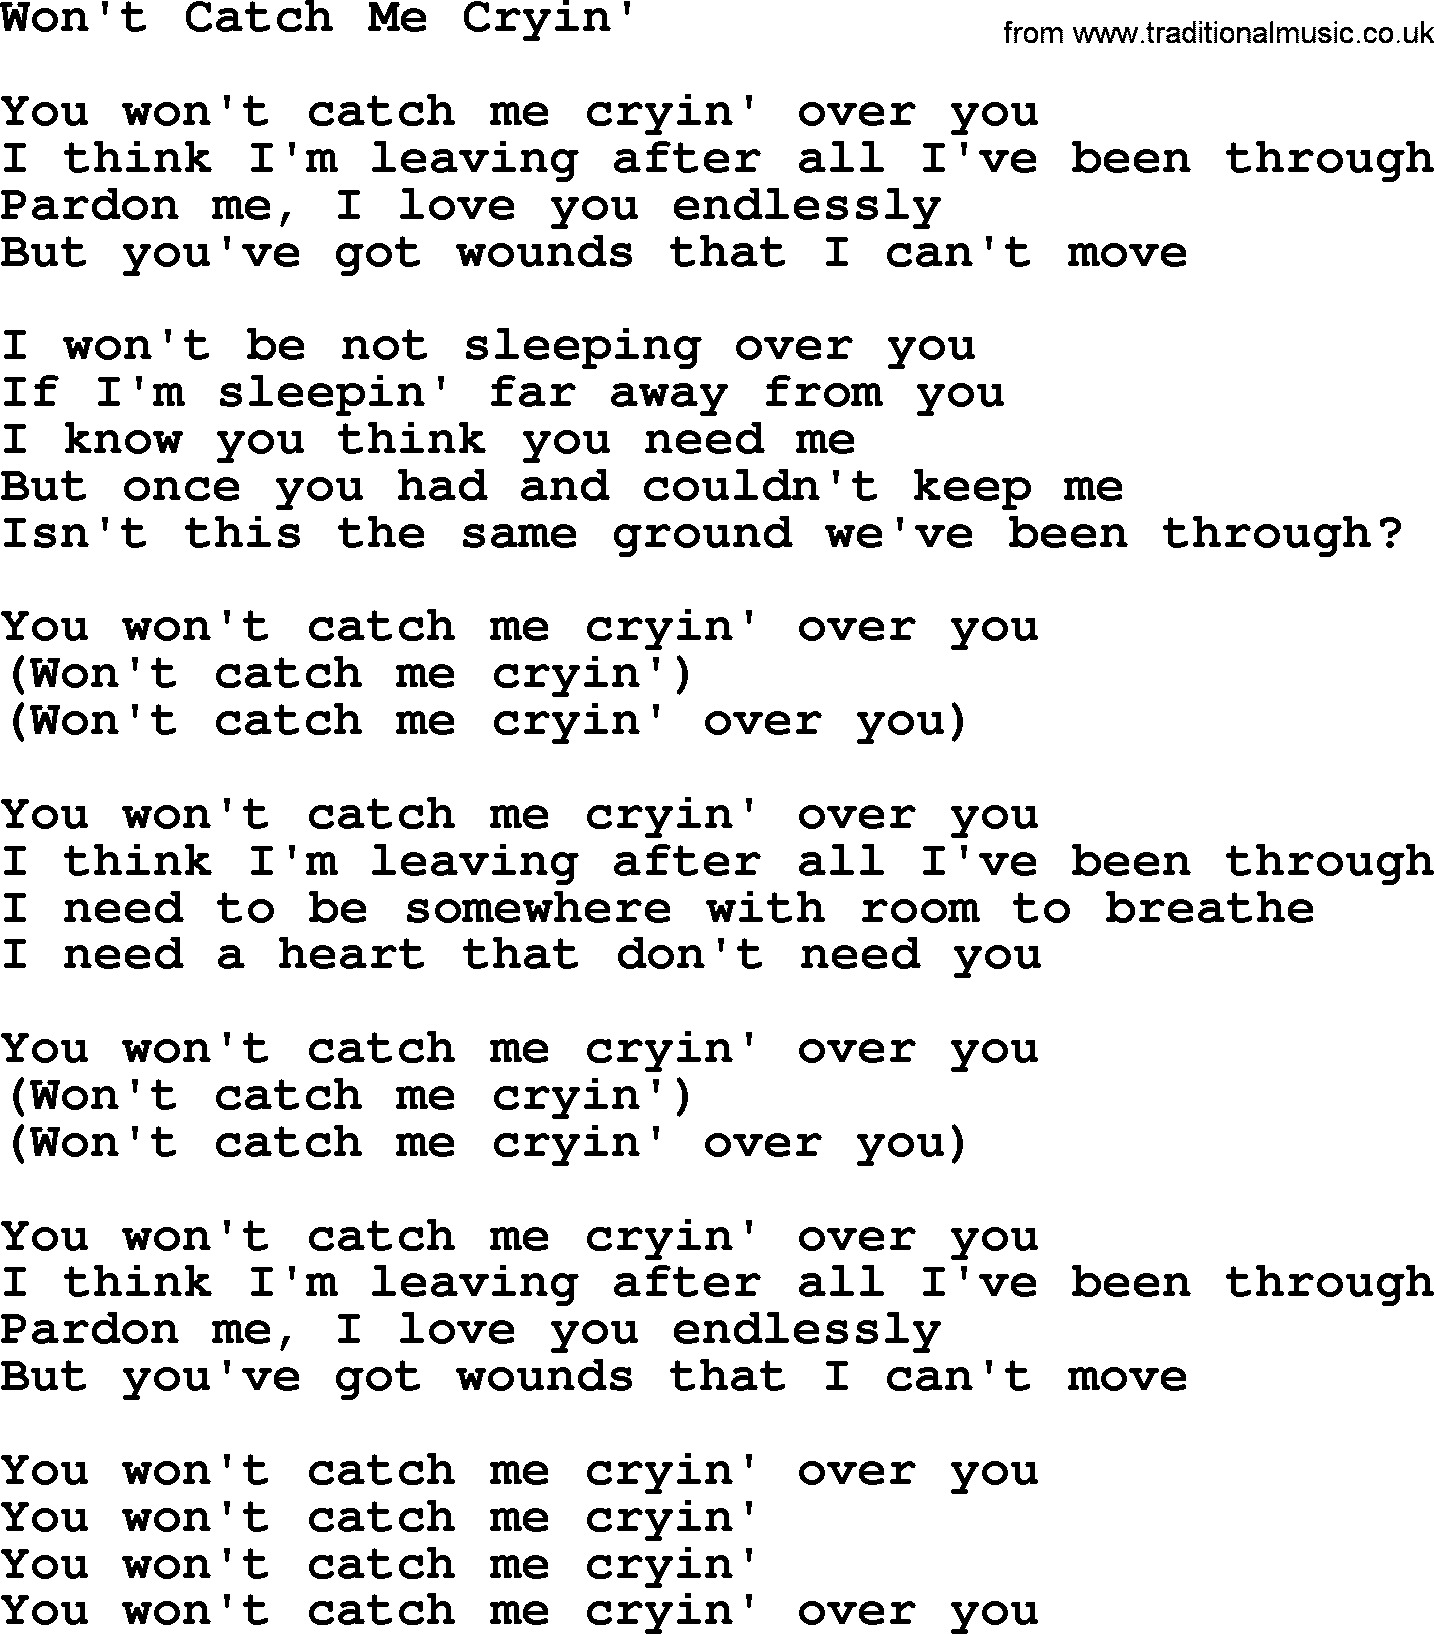 Willie Nelson song: Won't Catch Me Cryin' lyrics